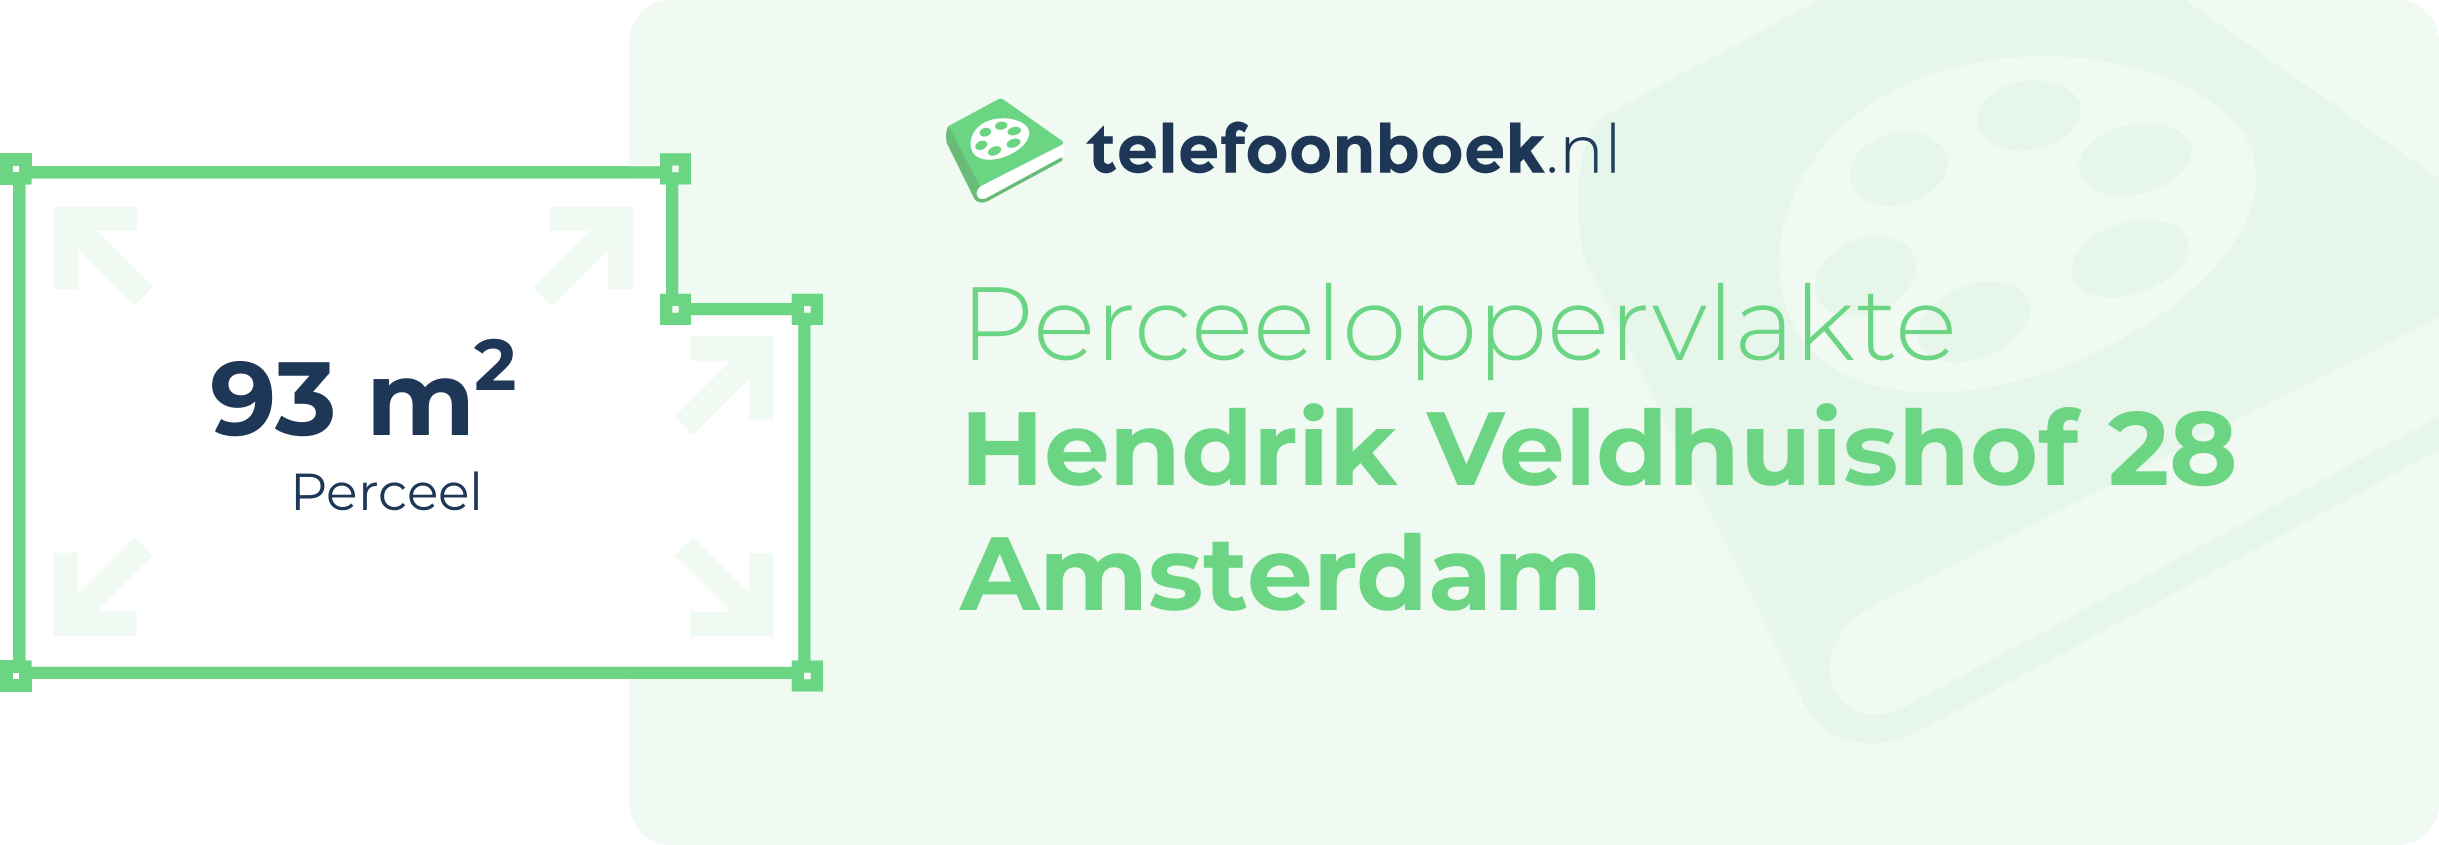 Perceeloppervlakte Hendrik Veldhuishof 28 Amsterdam